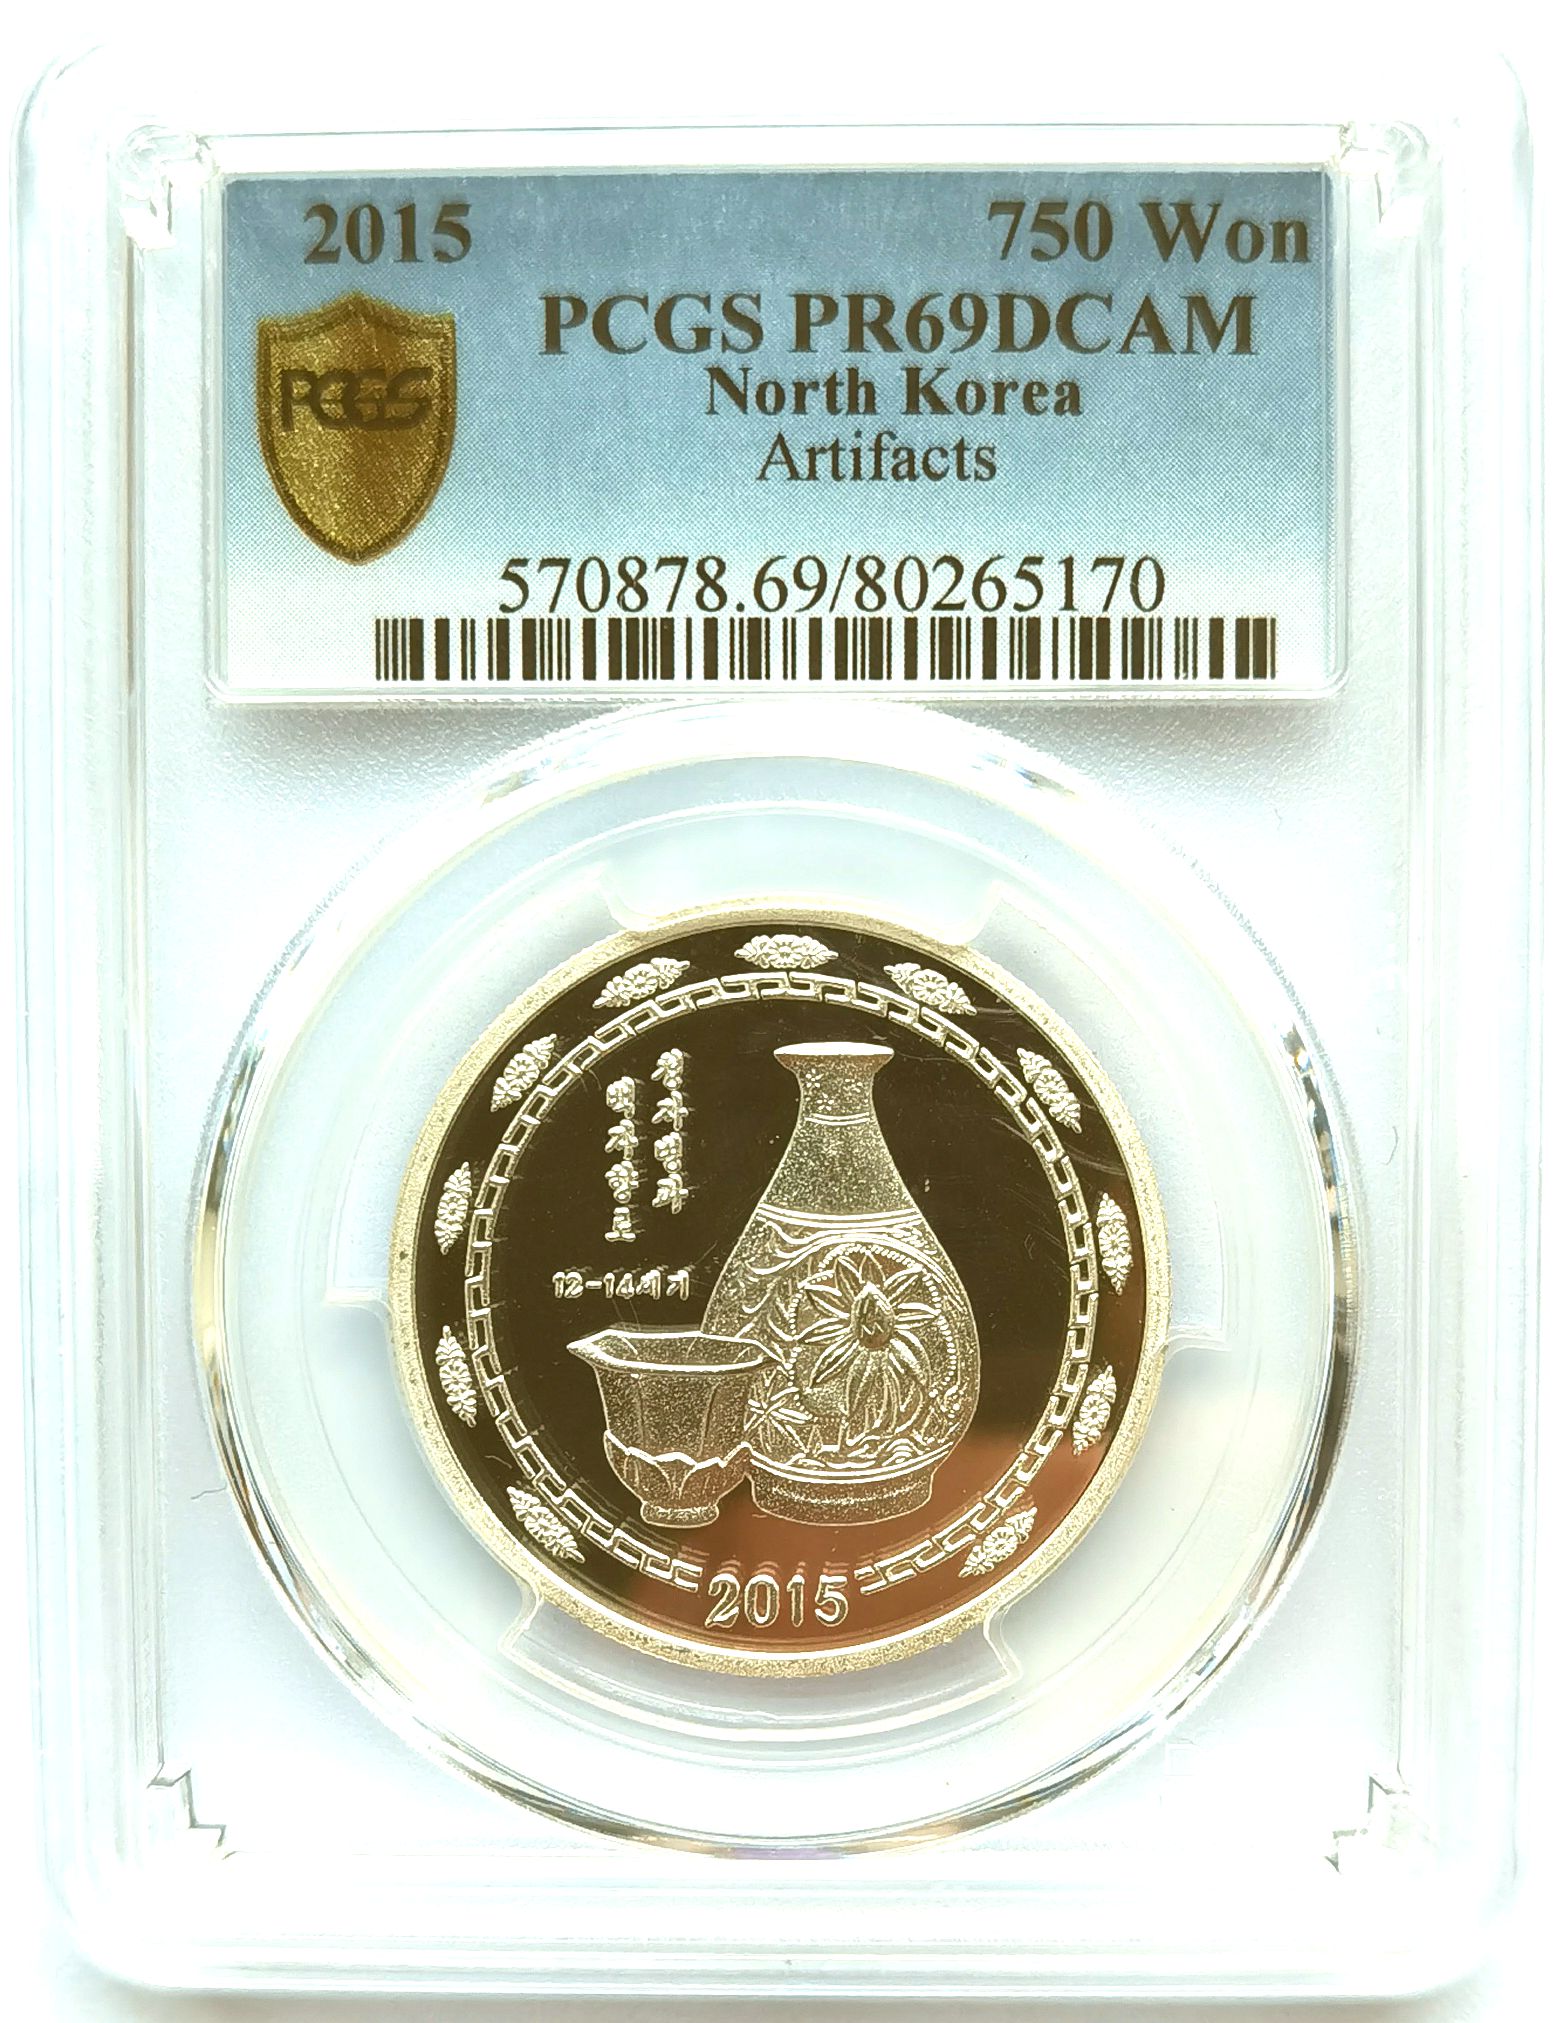 L3468, Korea "Koryo Celadon" Proof Silver Coin, 0.5 Ounce, 750 Won, 2015